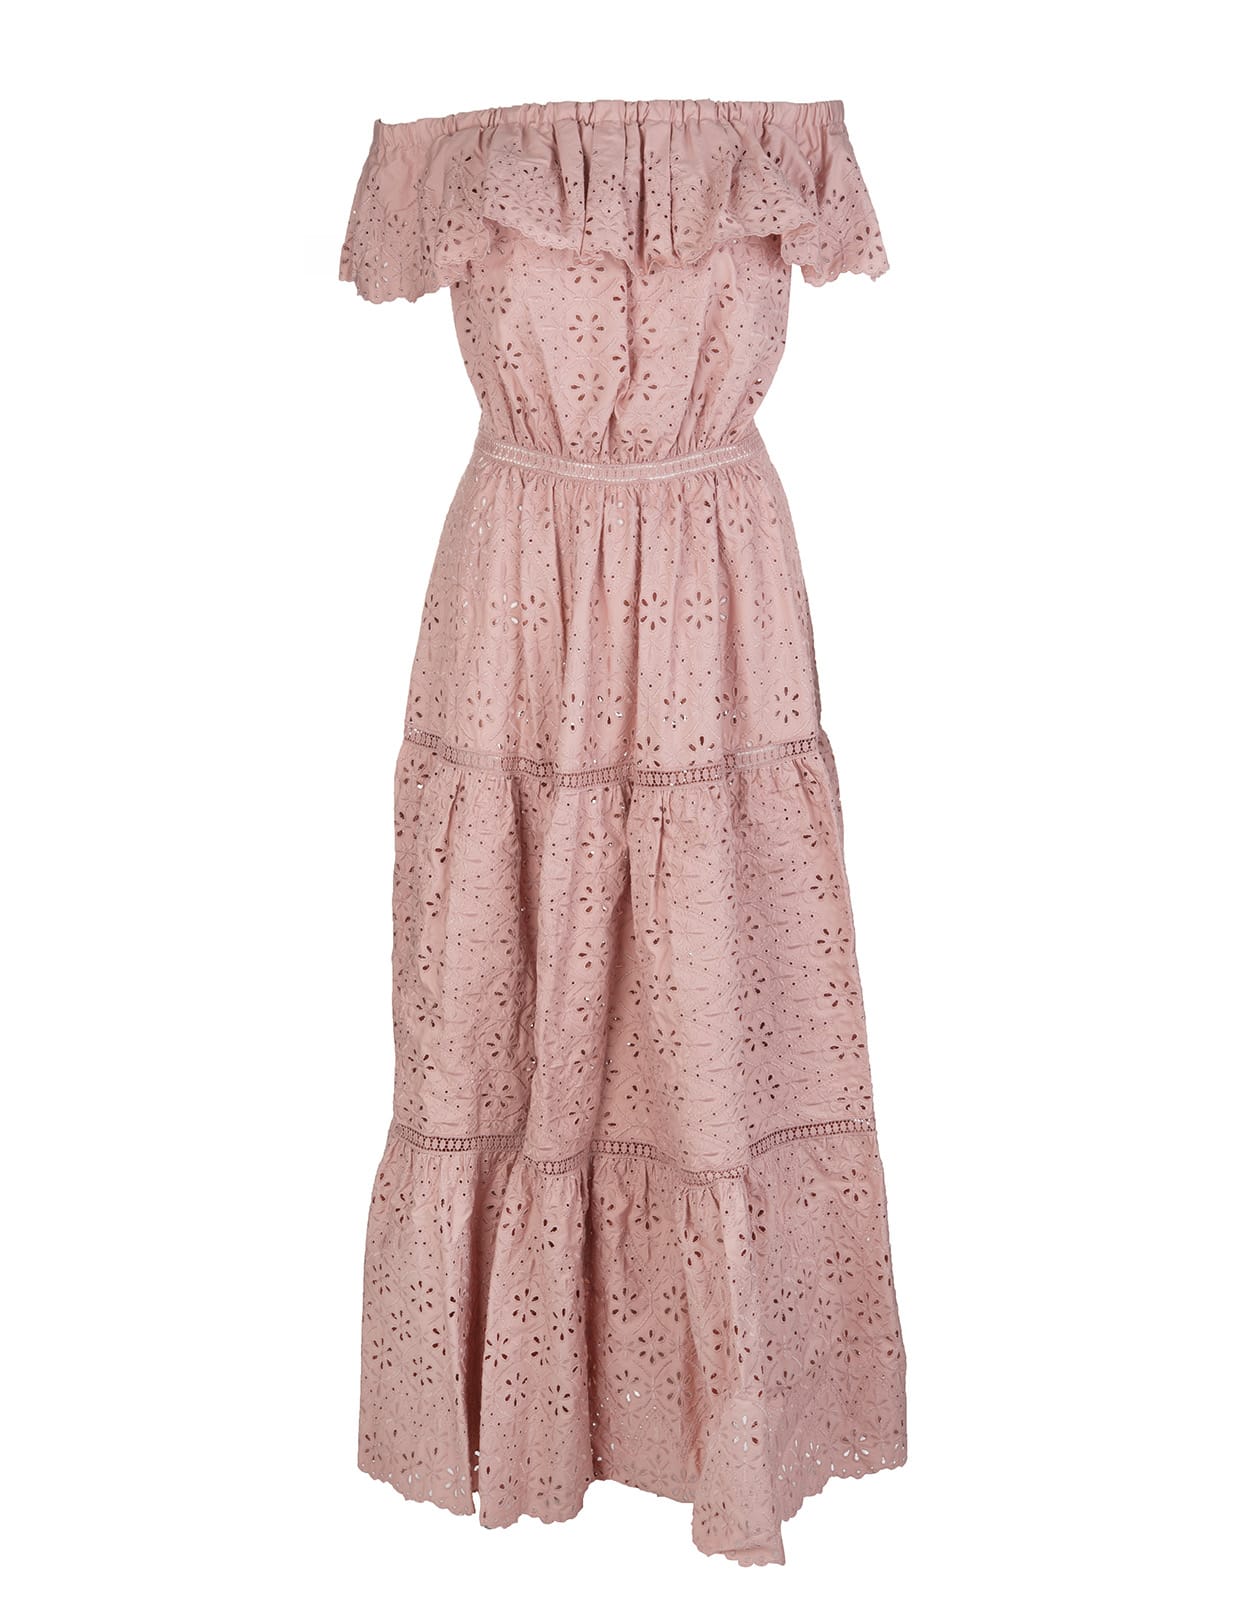 Parosh Blush Pink Off-the-shoulder Broderie Anglaise Dress